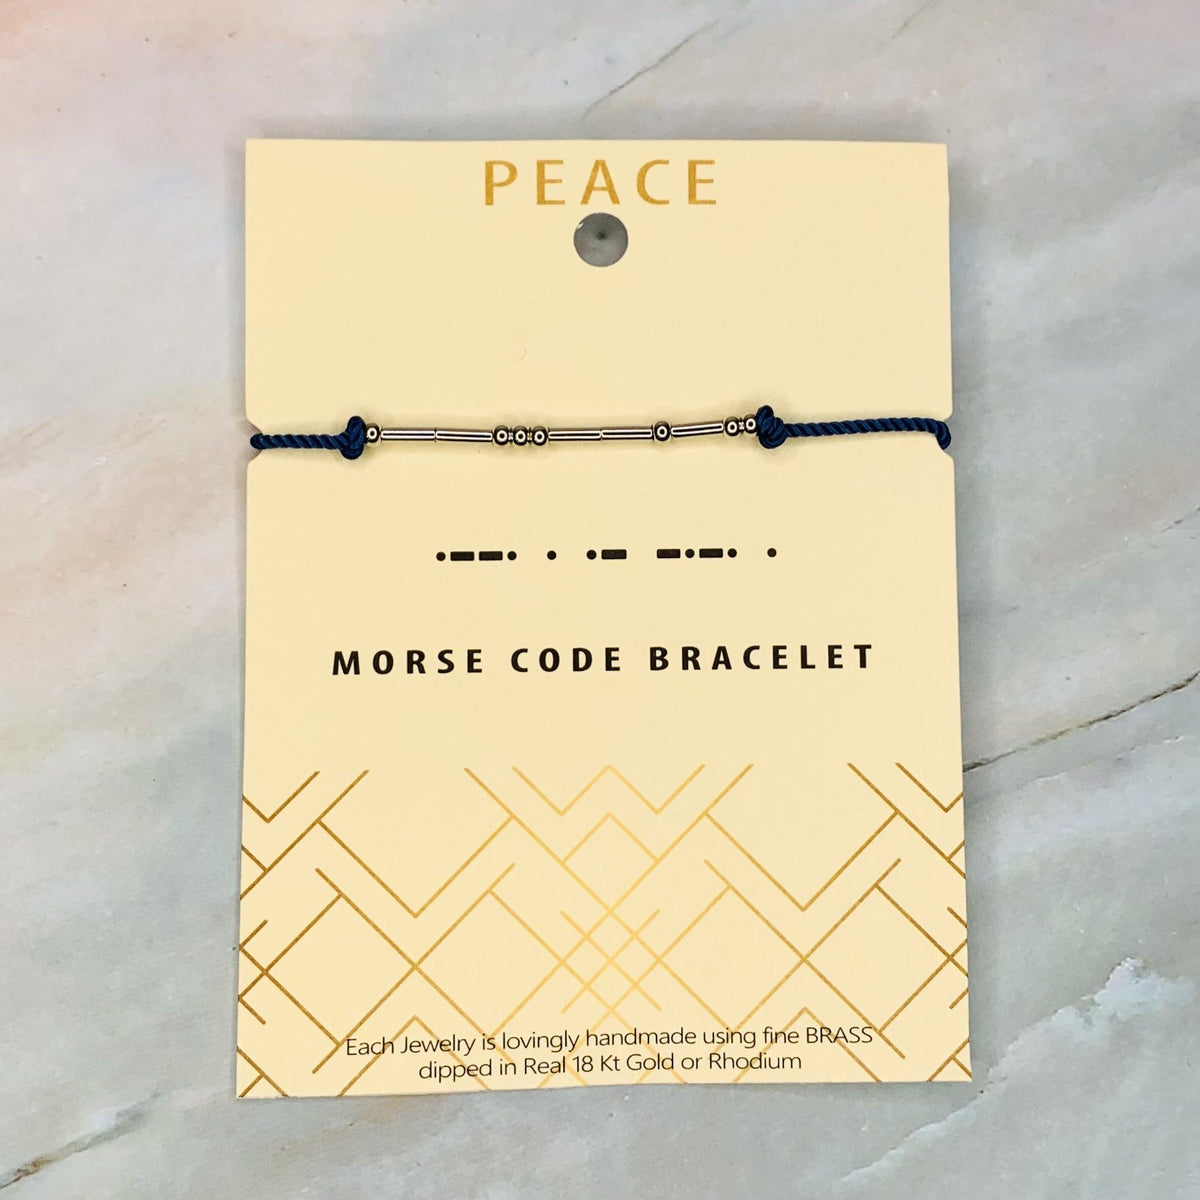 Morse Code Bracelet Jewelry Lauren-Spencer Peace 